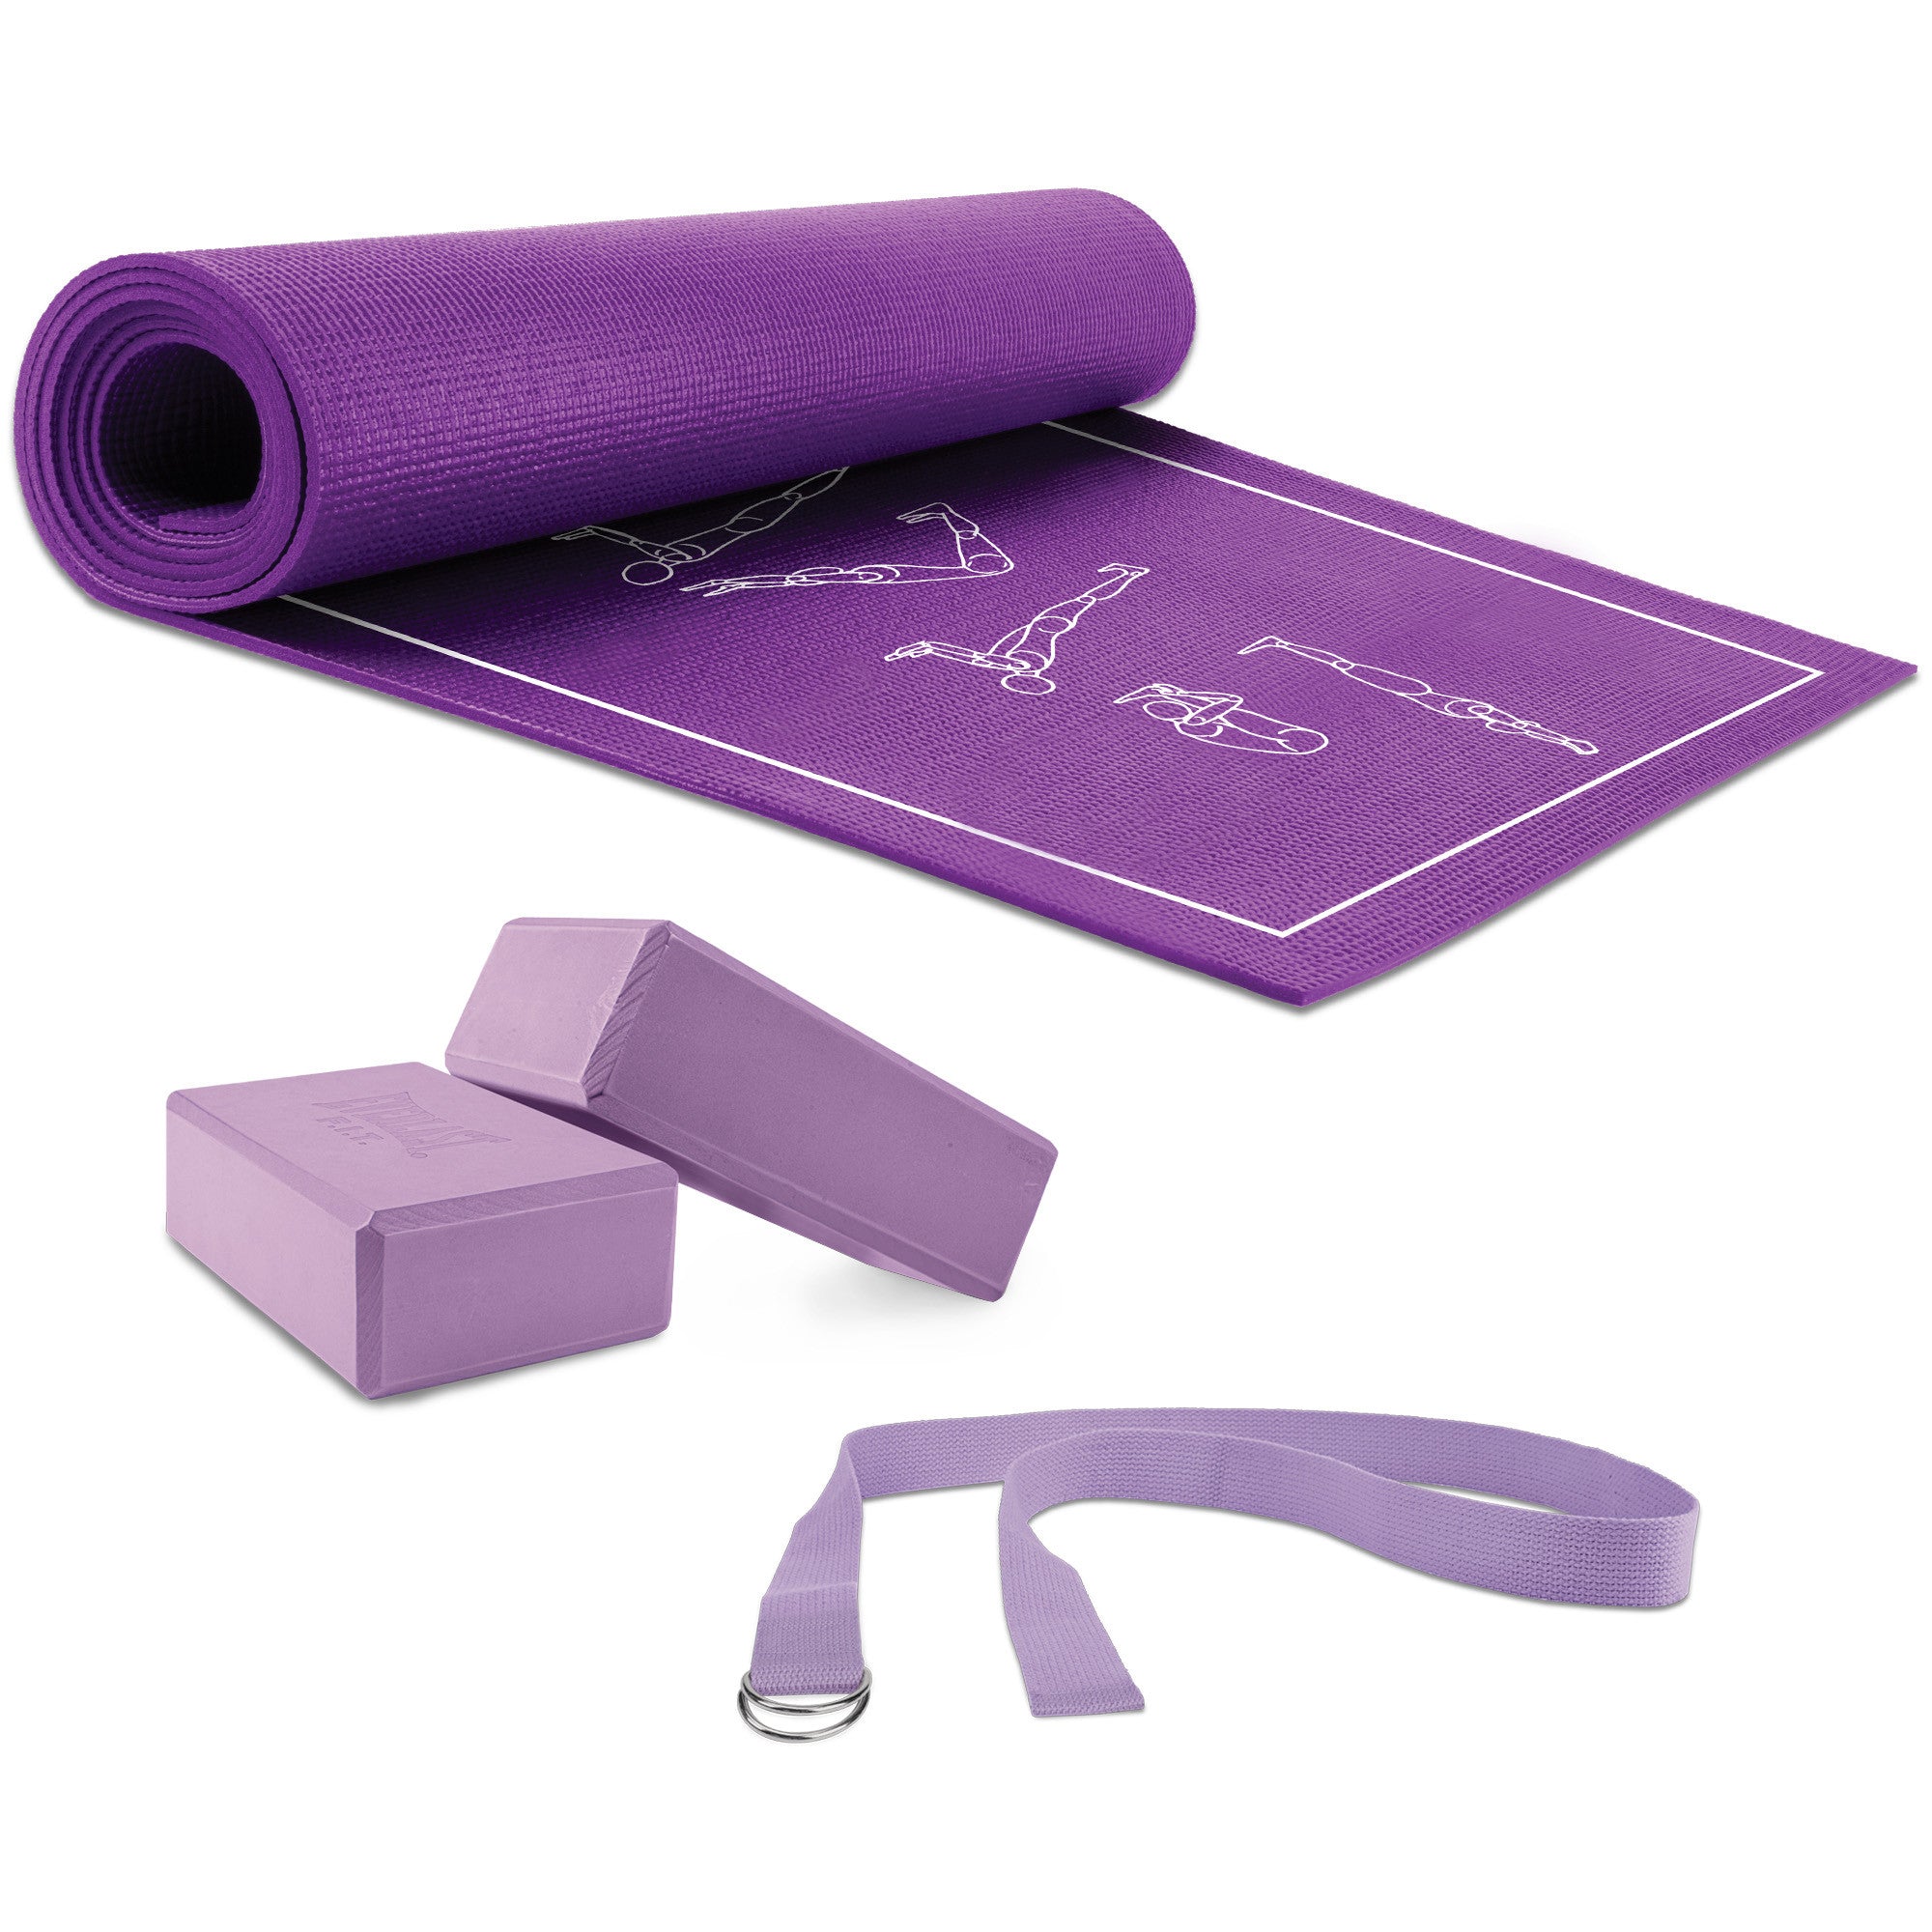 Lixada Yoga Set 5PCS Yoga Equipment Set Include Yoga Ball Yoga Blocks  Stretching Strap Resistance Loop Band Exercise Band for Yoga